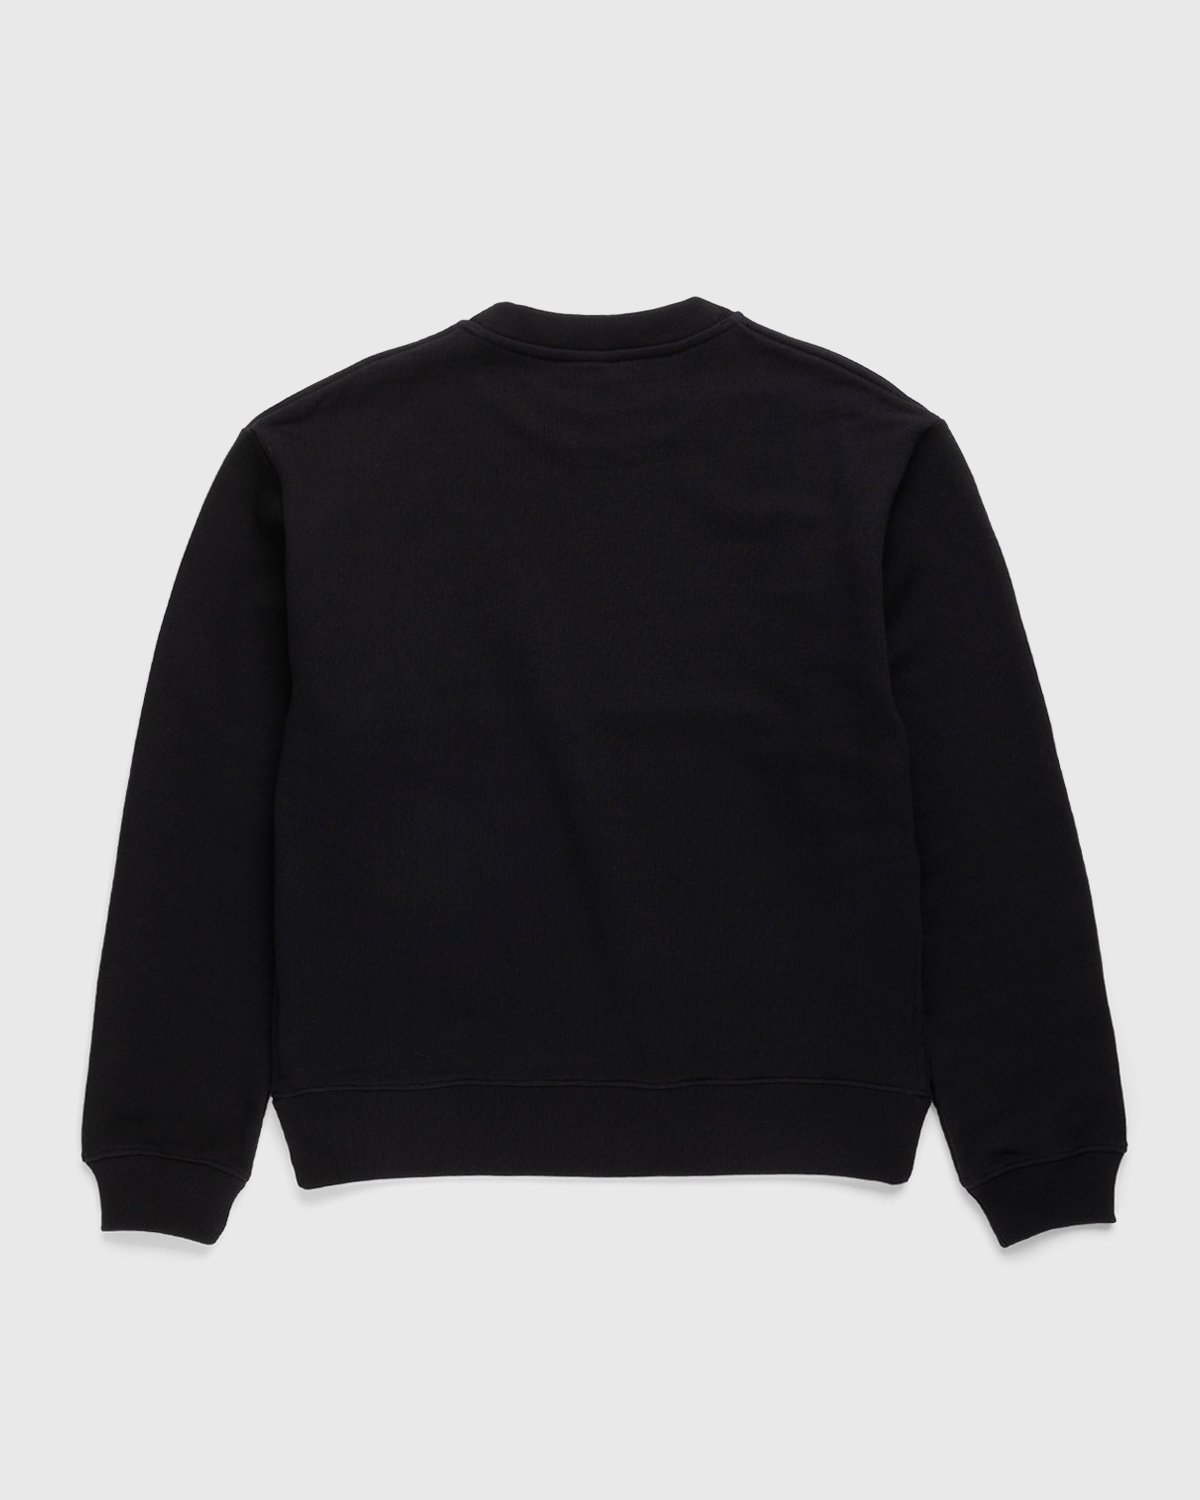 Dries van Noten - Haf Crewneck Sweater Black - Clothing - Black - Image 2